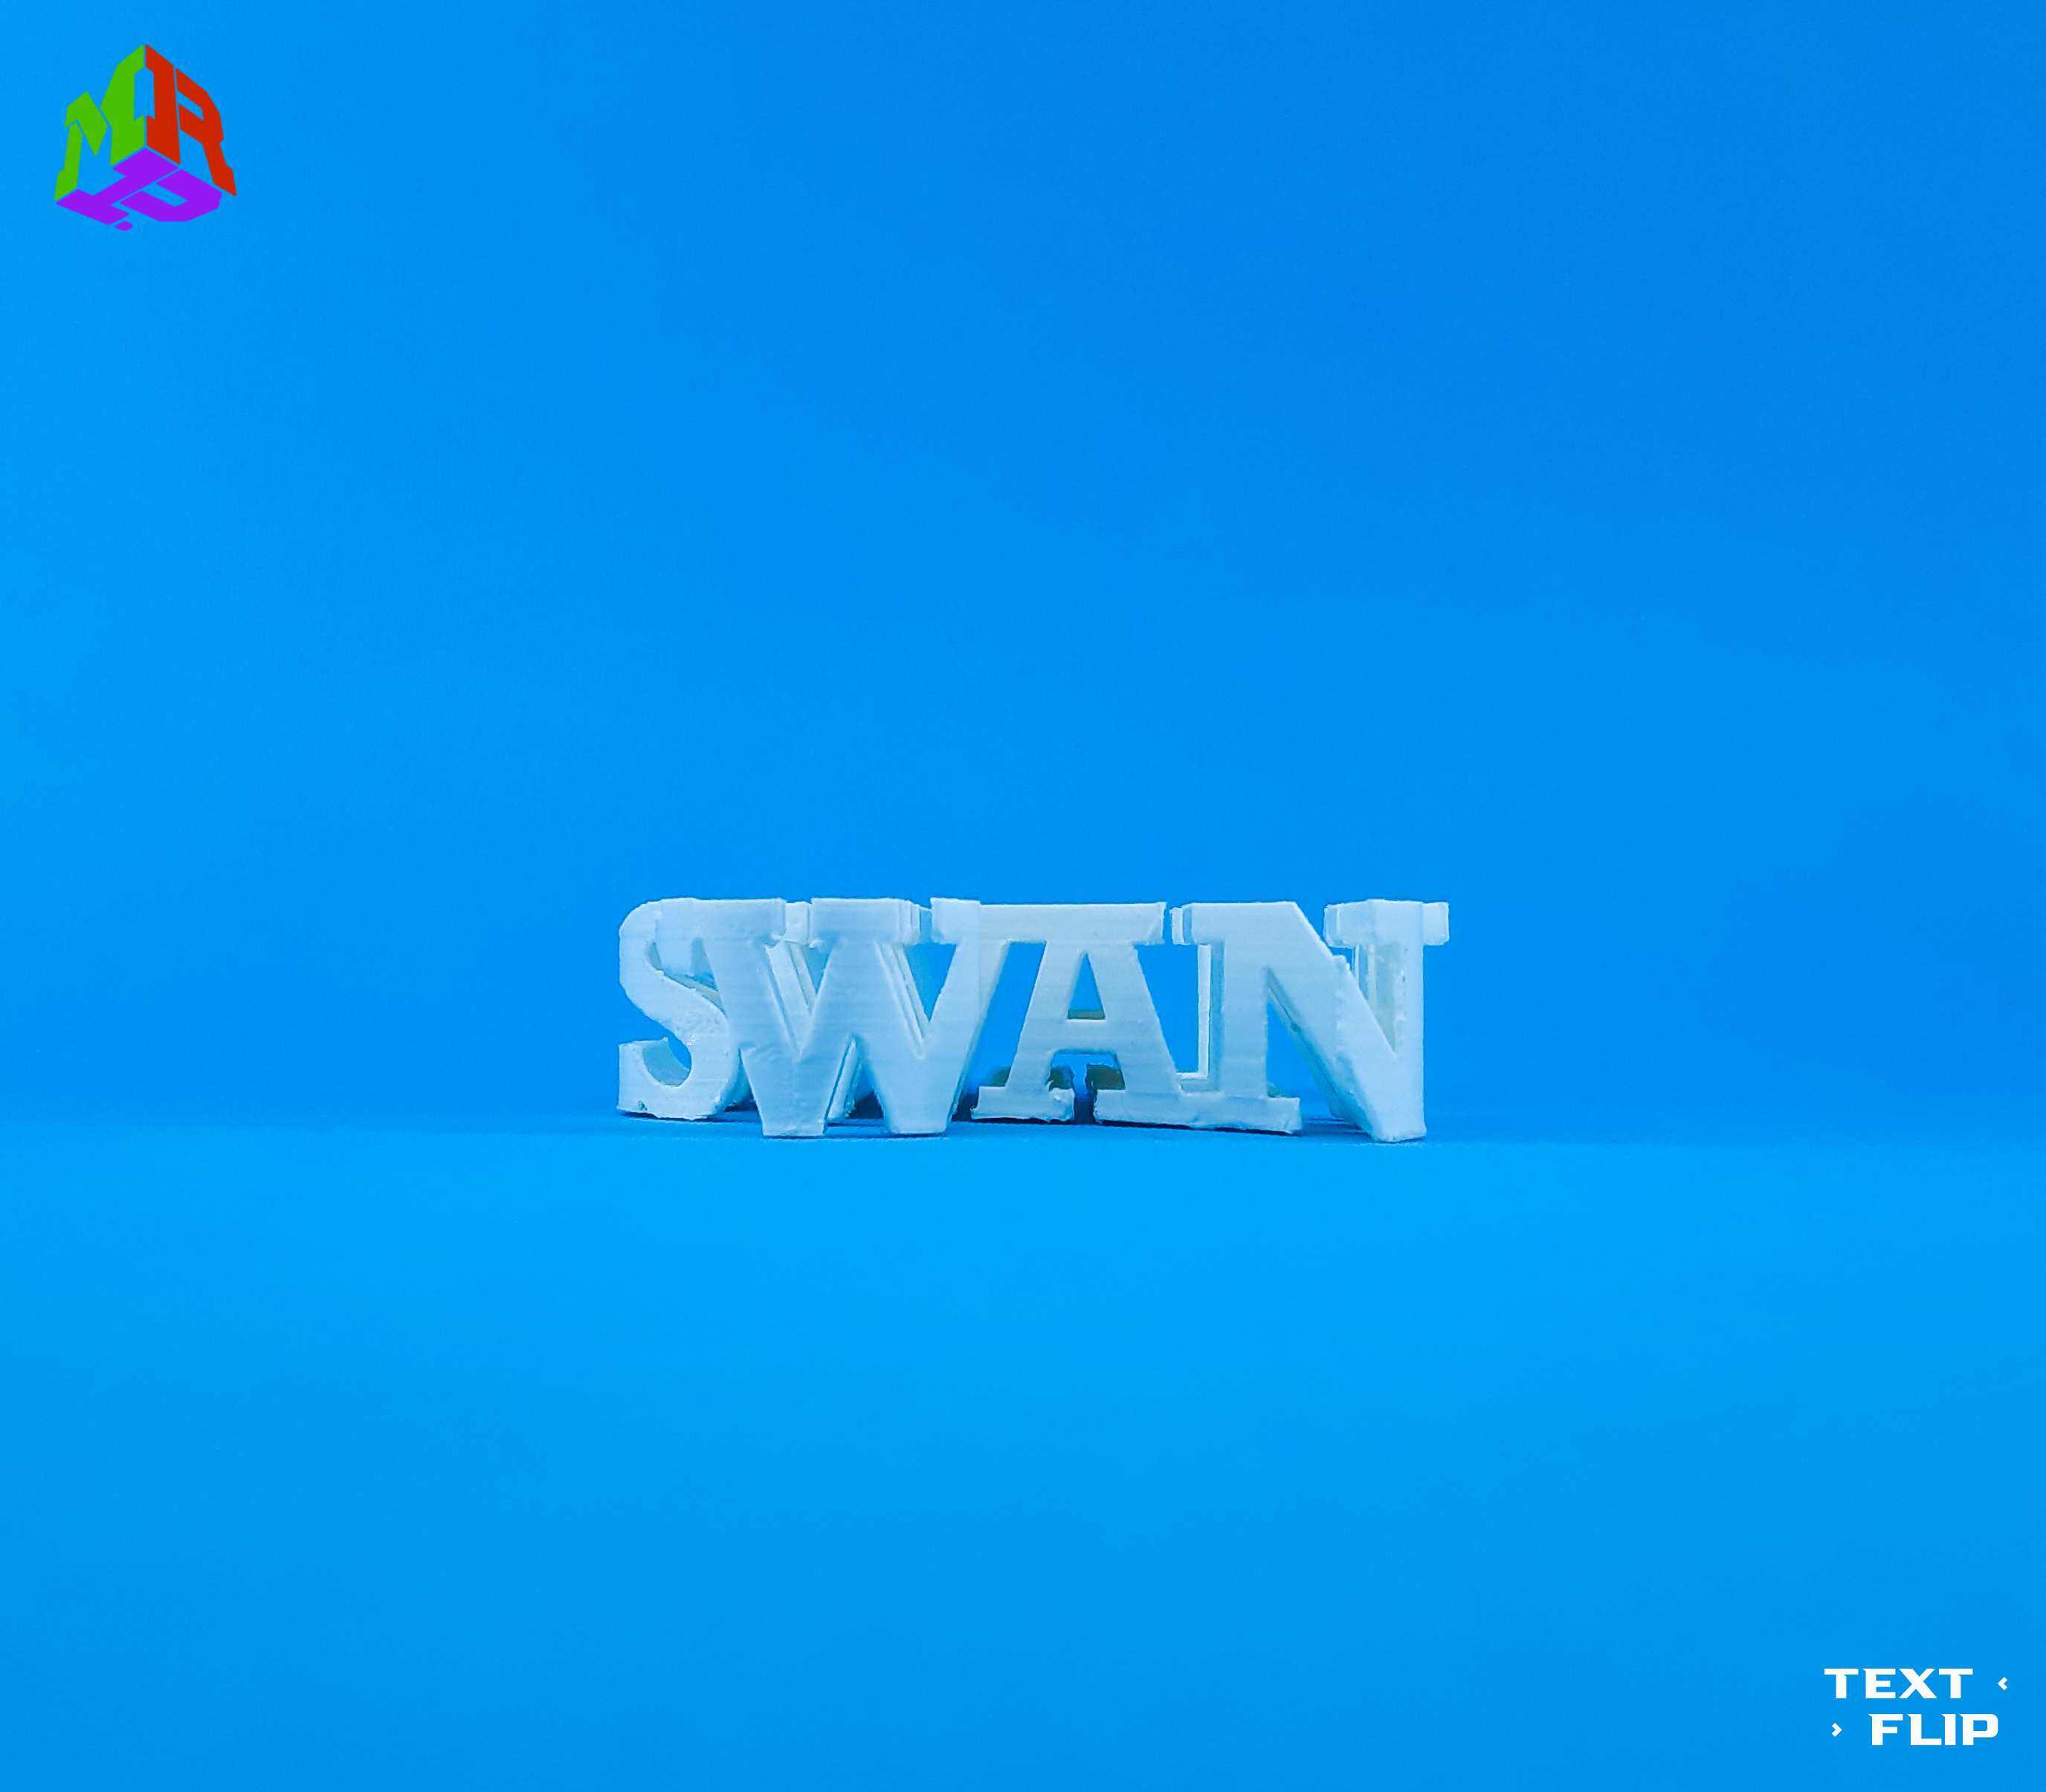 Text Flip - Swan